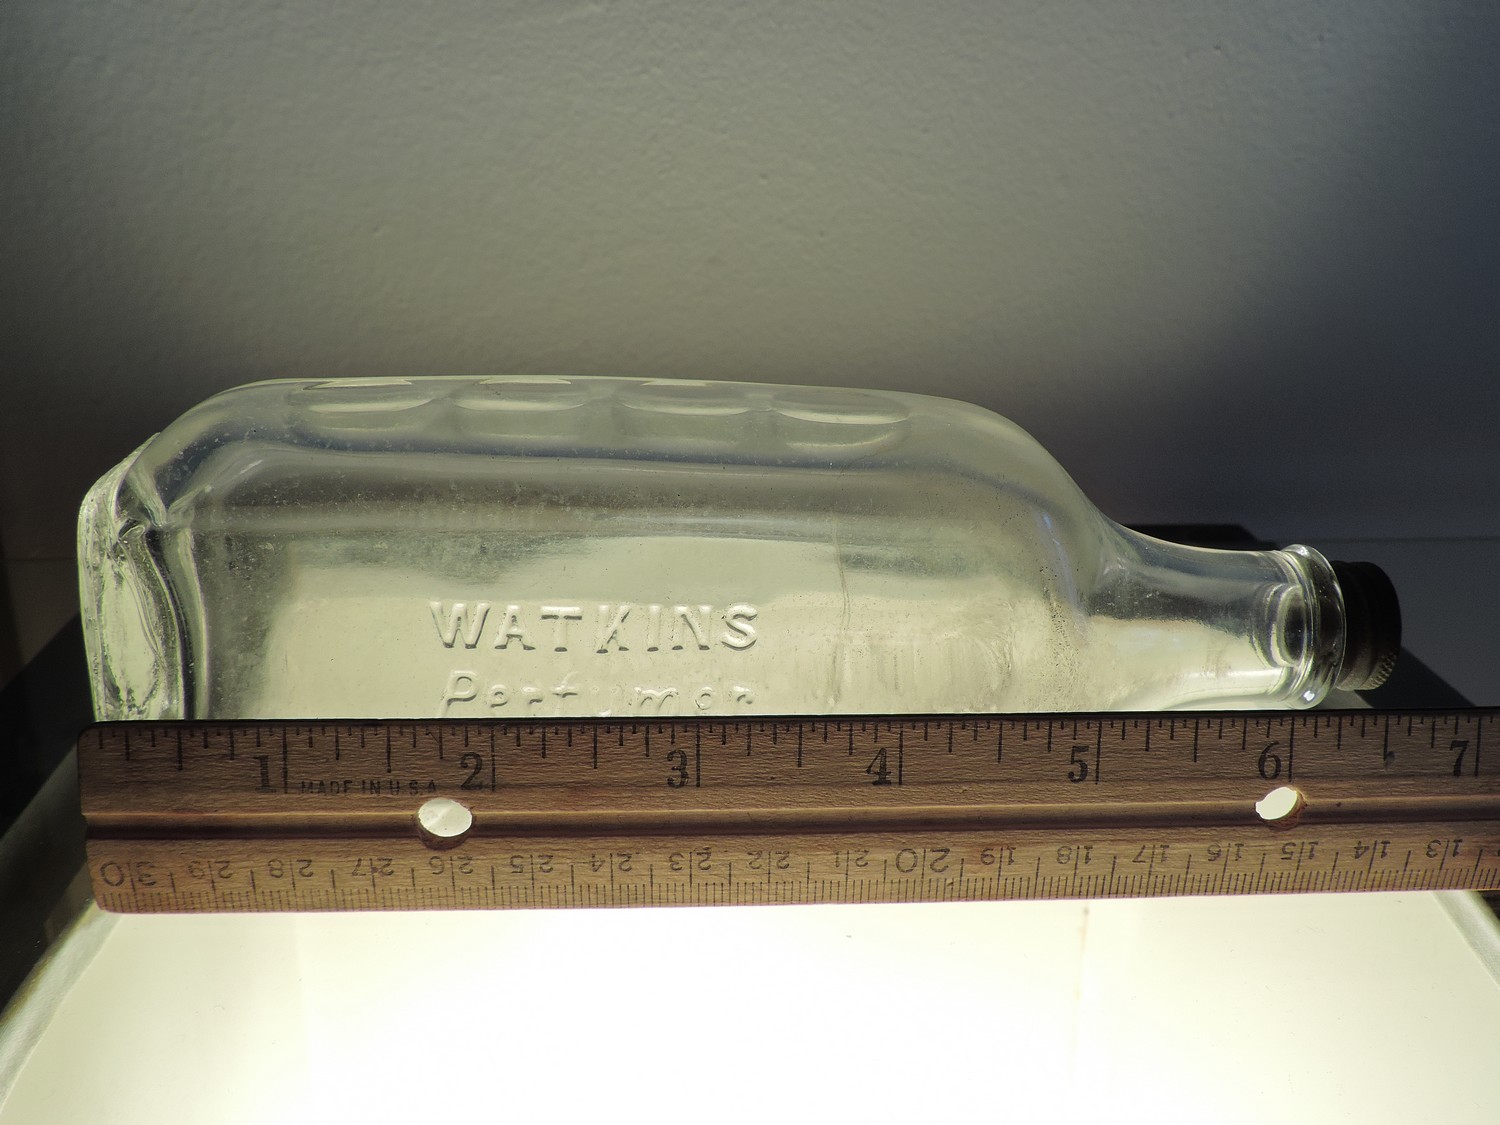 1932 Watkins Perfumer Bottle (1)